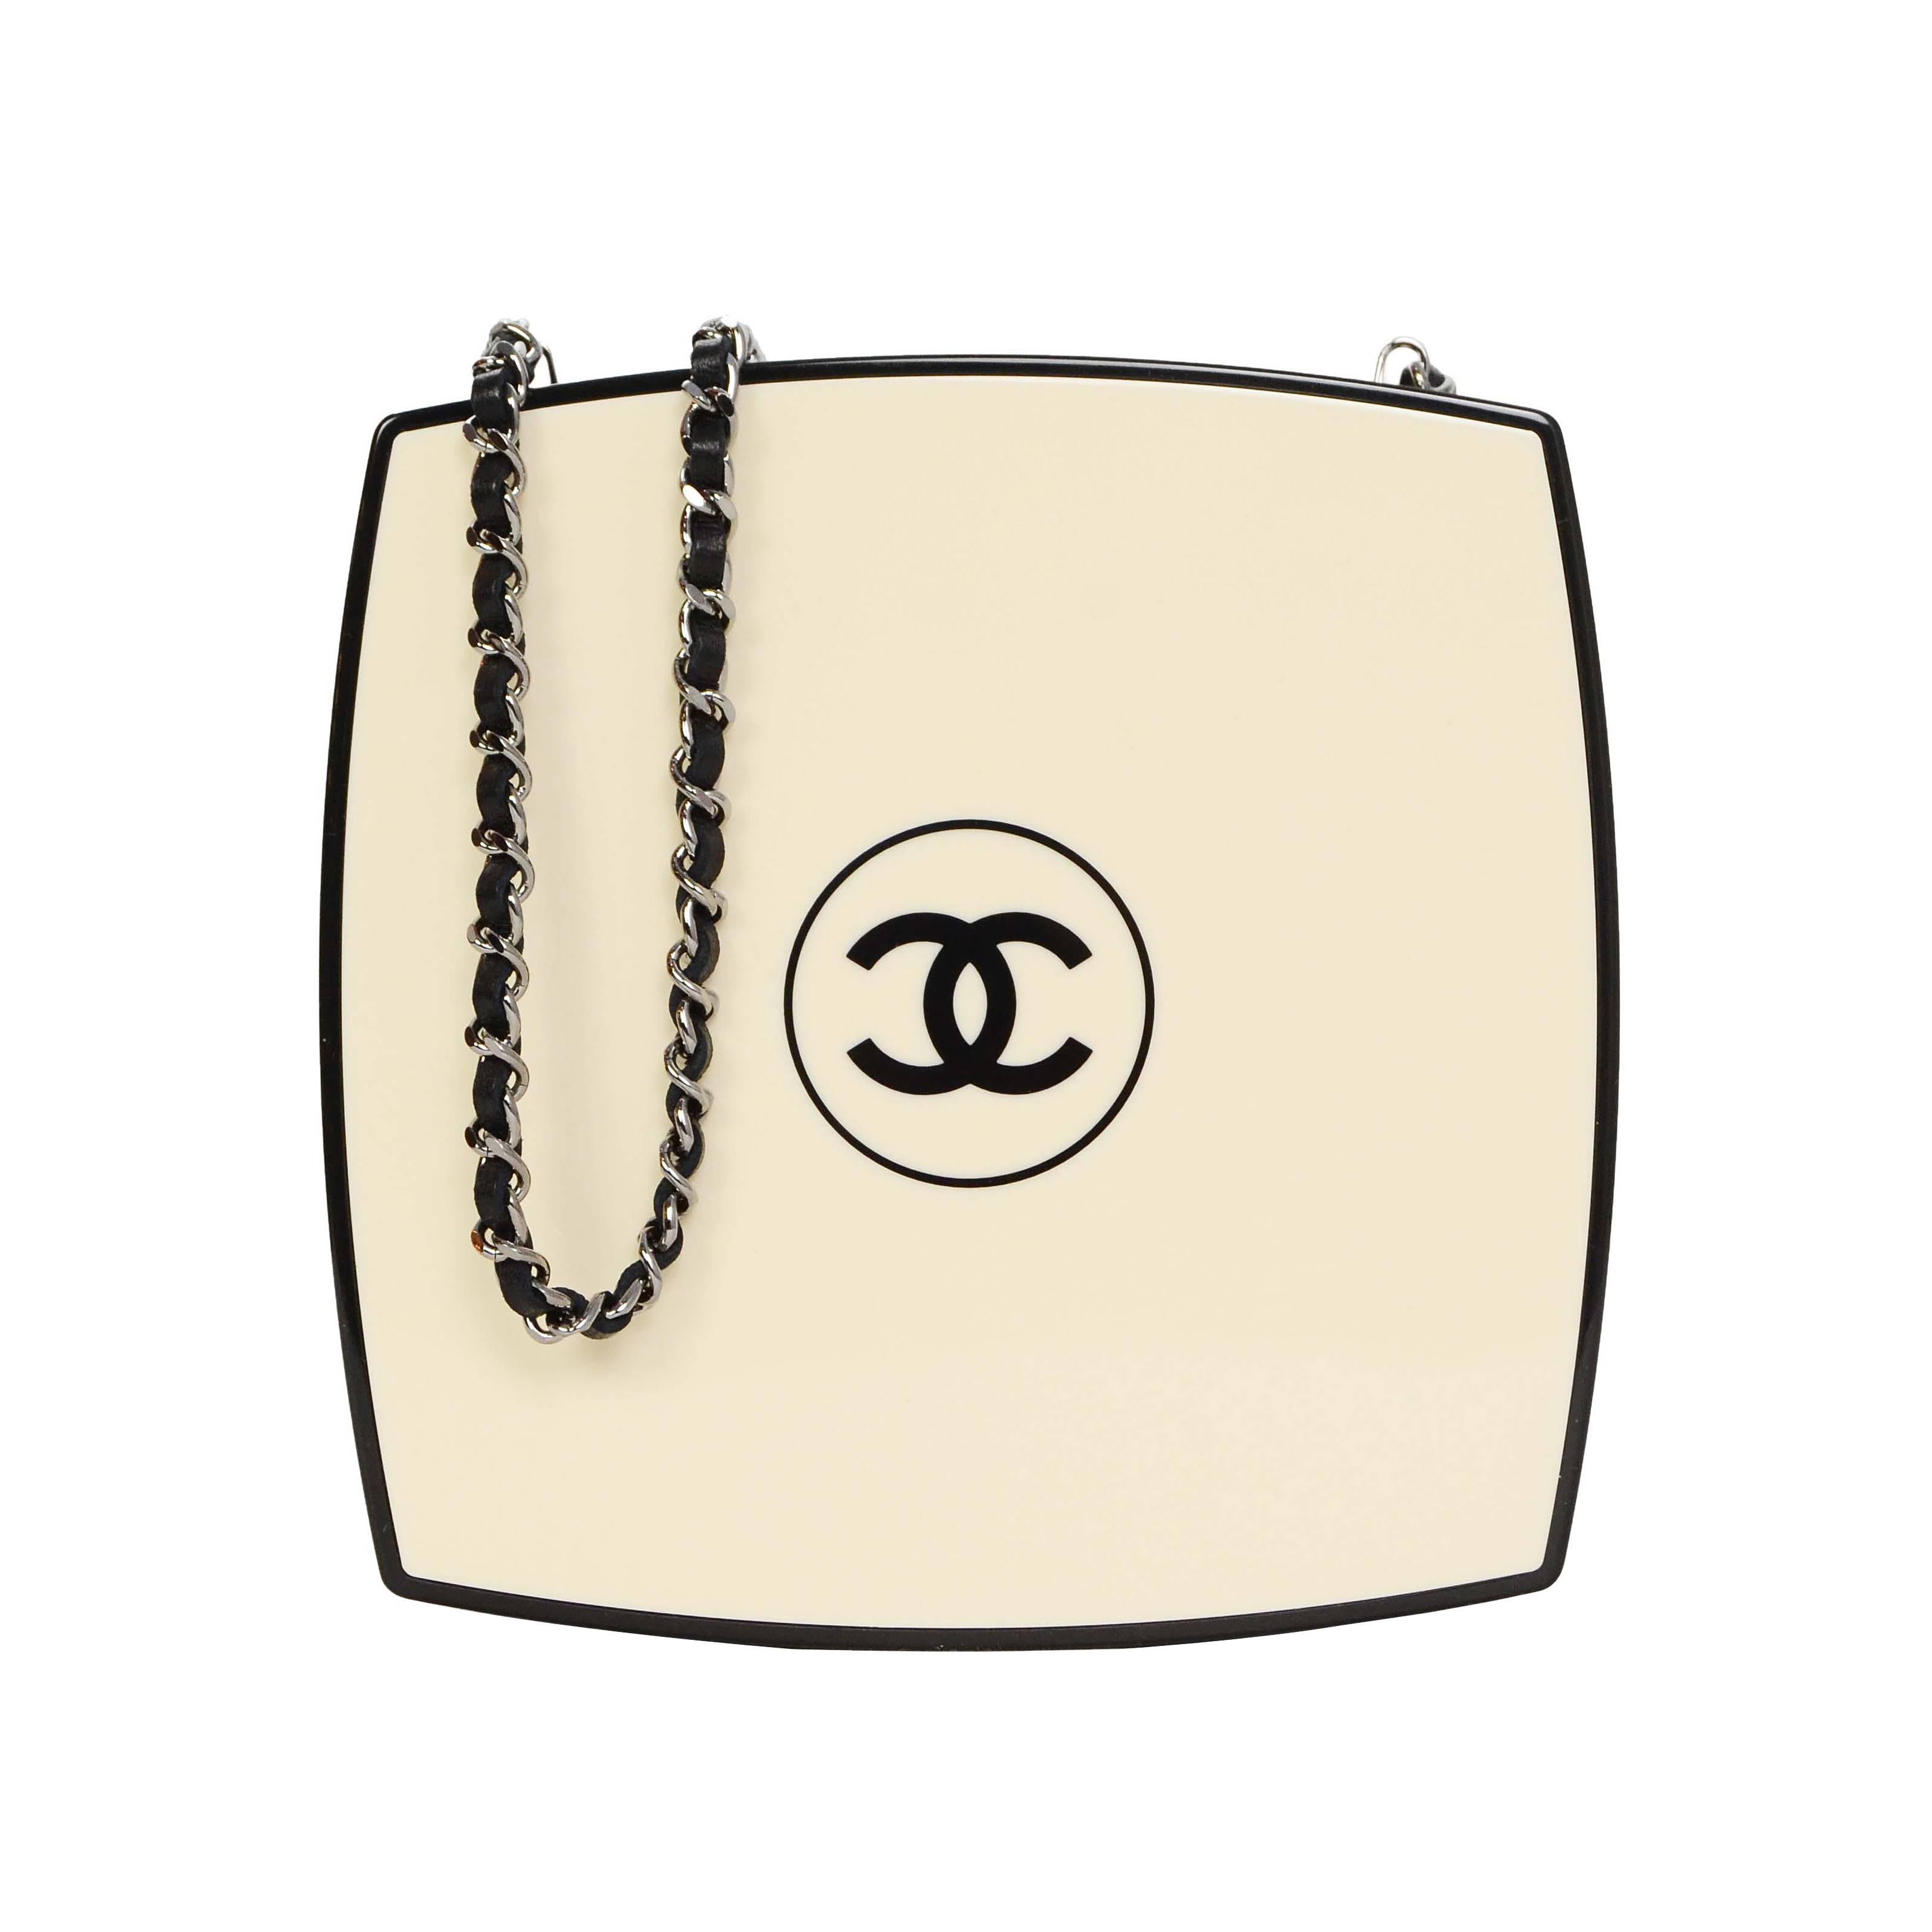 Chanel Rare 2015 Runway Beige & Black Compact Clutch Bag rt. $8, 500